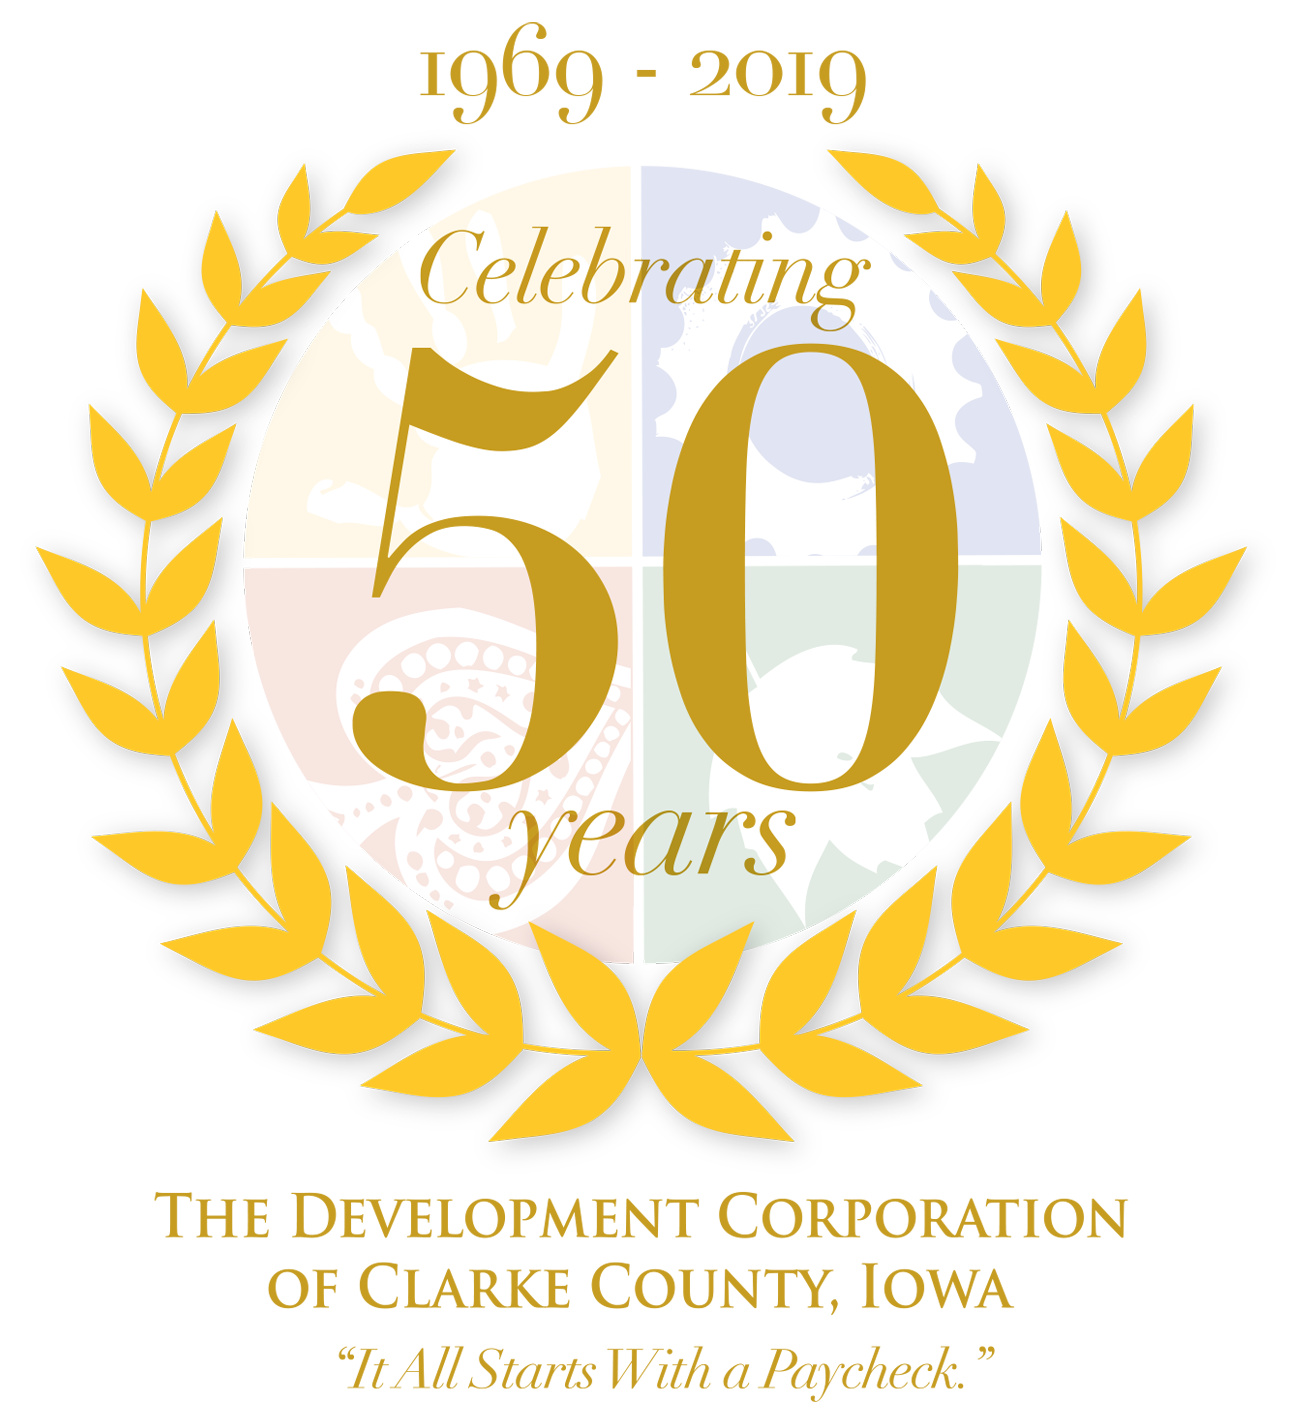 Clarke County Development Corporation 50th Anniversary